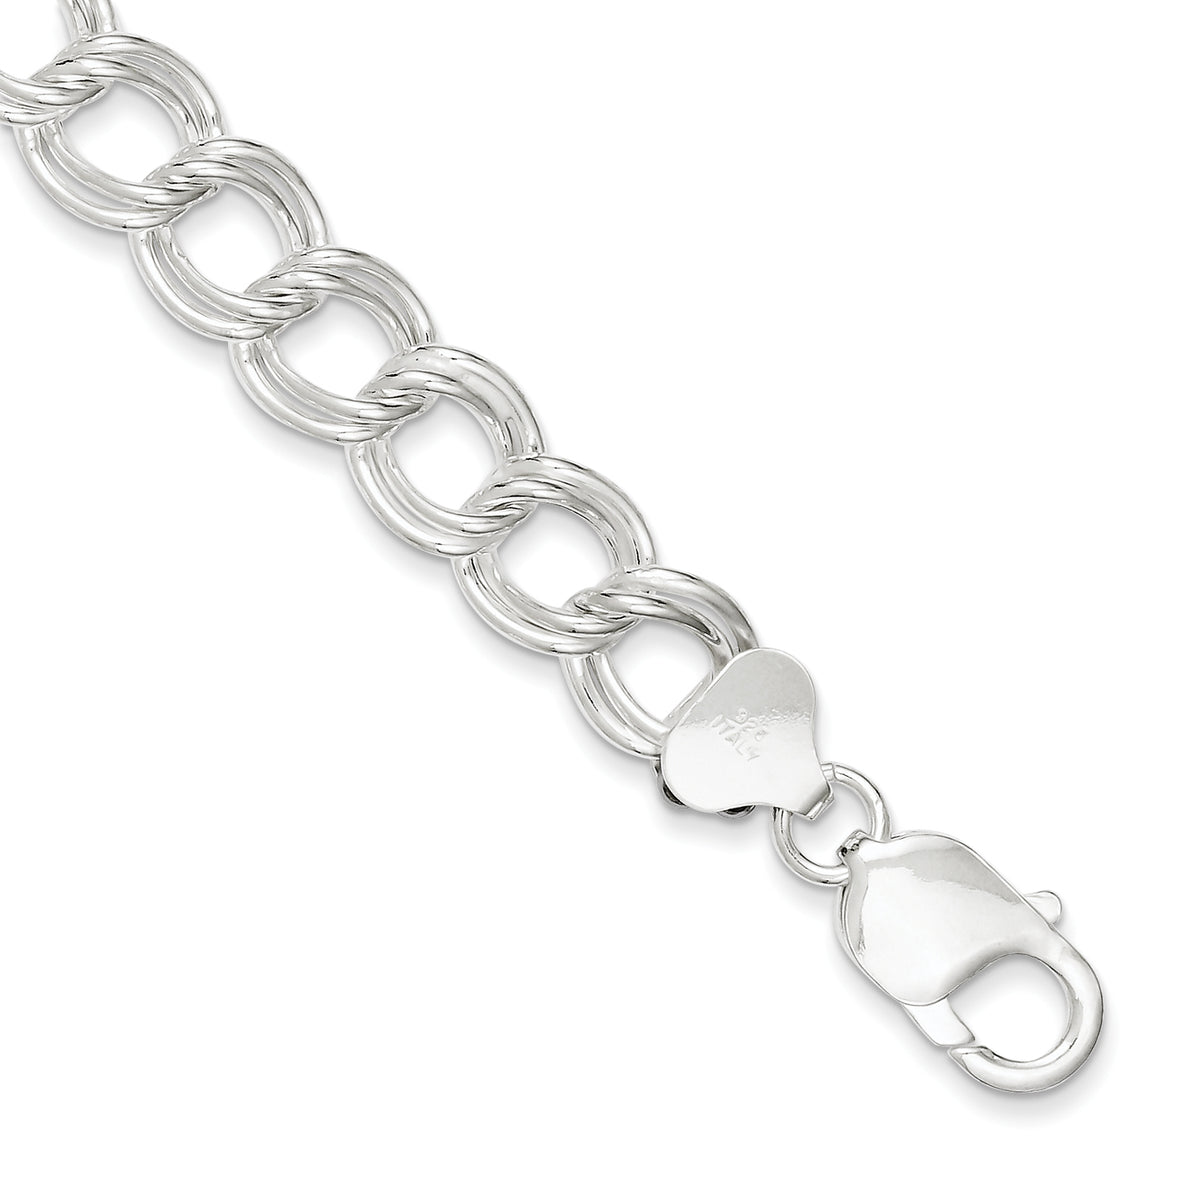 Sterling Silver 10.5mm Double Link Charm Bracelet